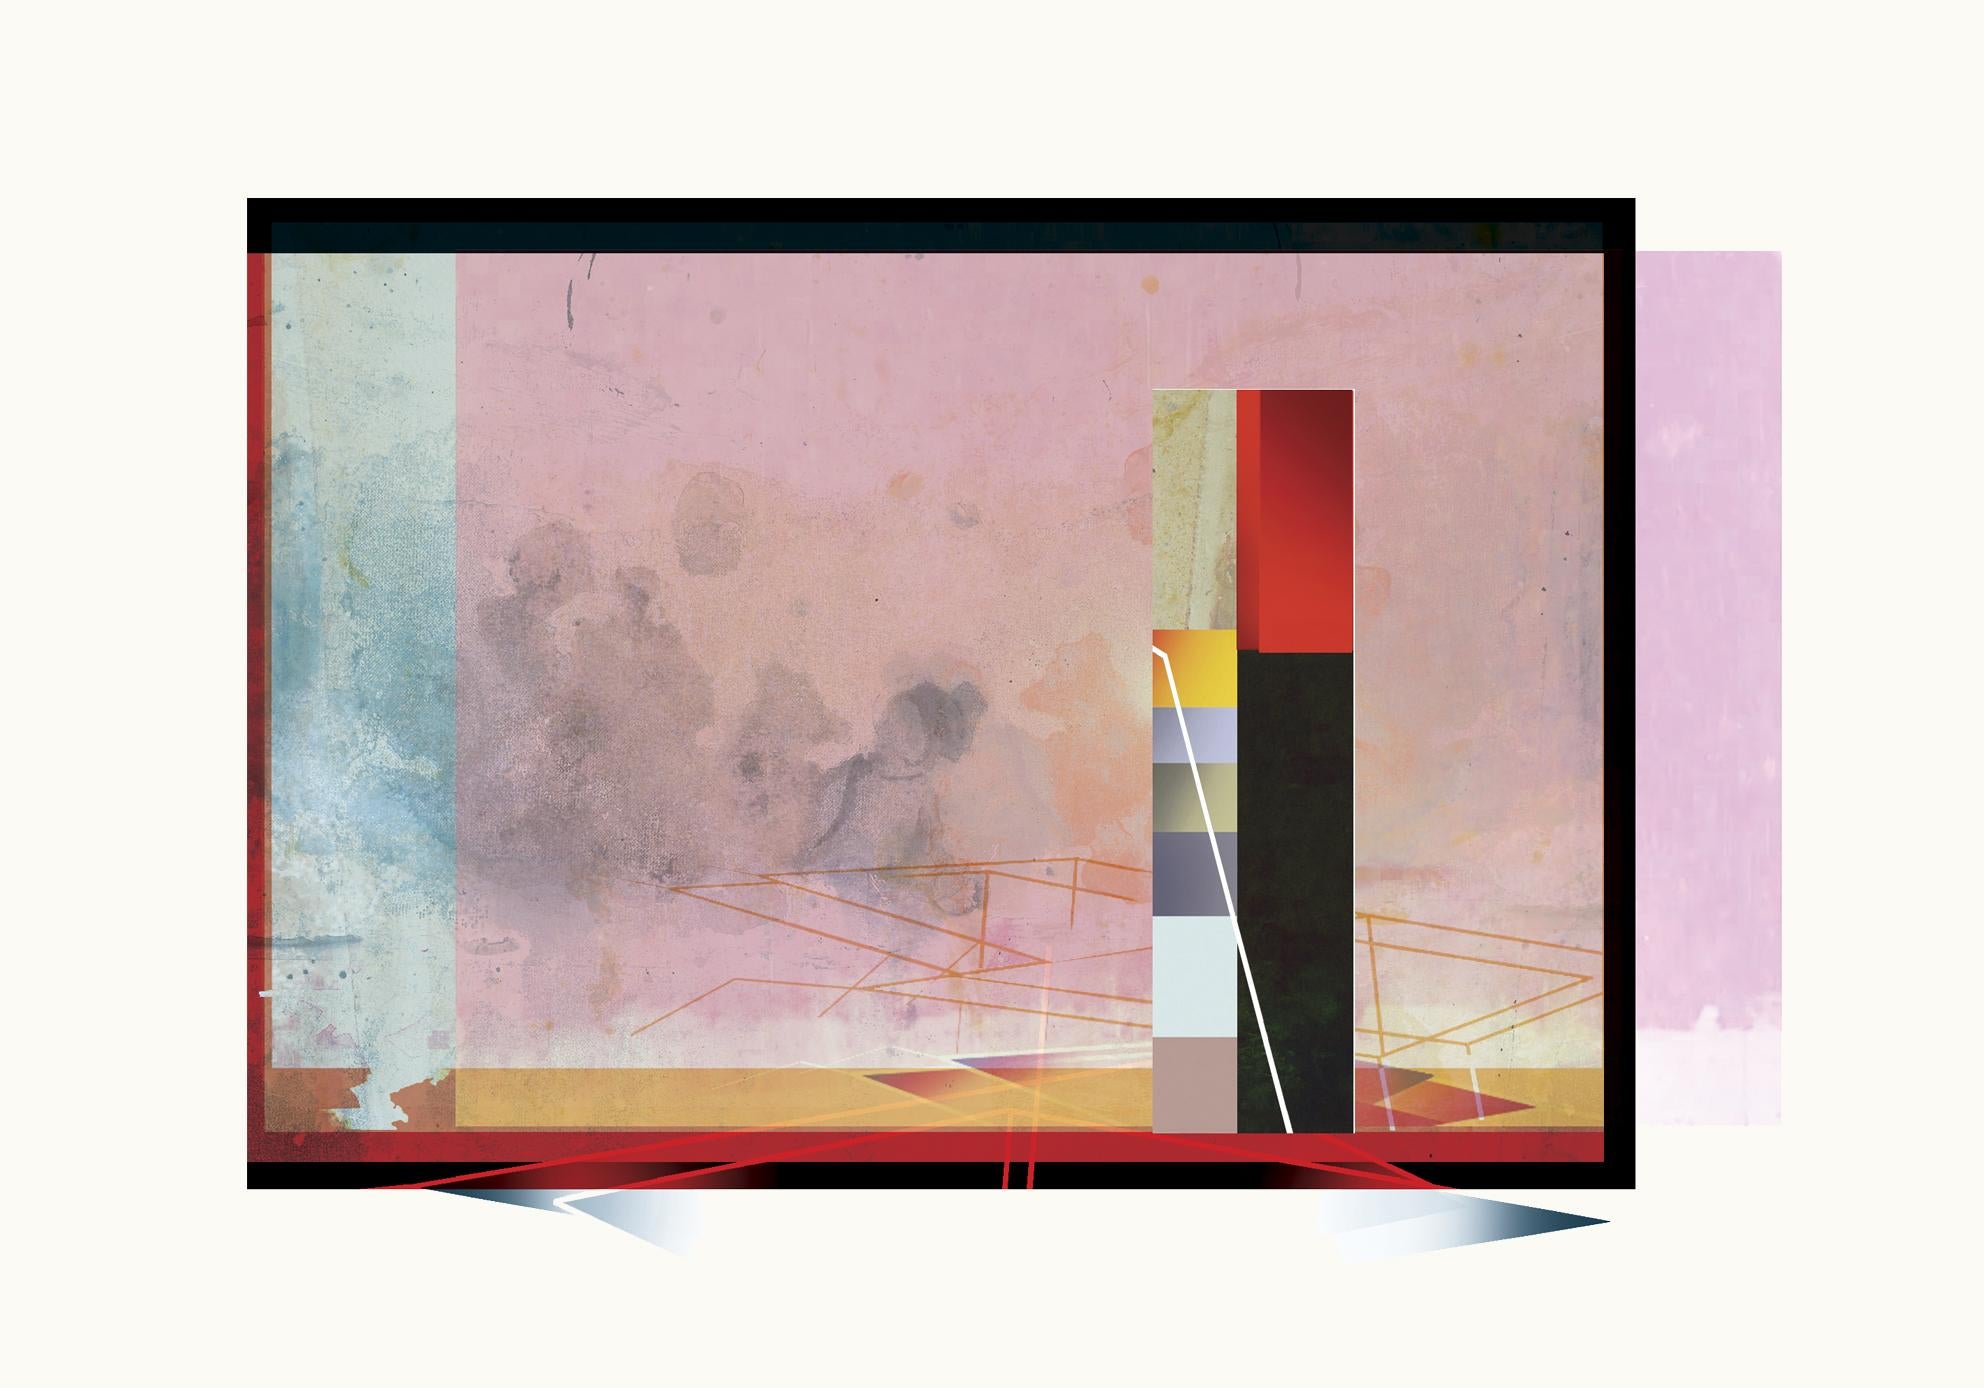 Francisco Nicolás Abstract Print – Casa 1 – Zeitgenössisch, Abstrakt, Pop Art, Surrealistisch, geometrisch, Landschaft 